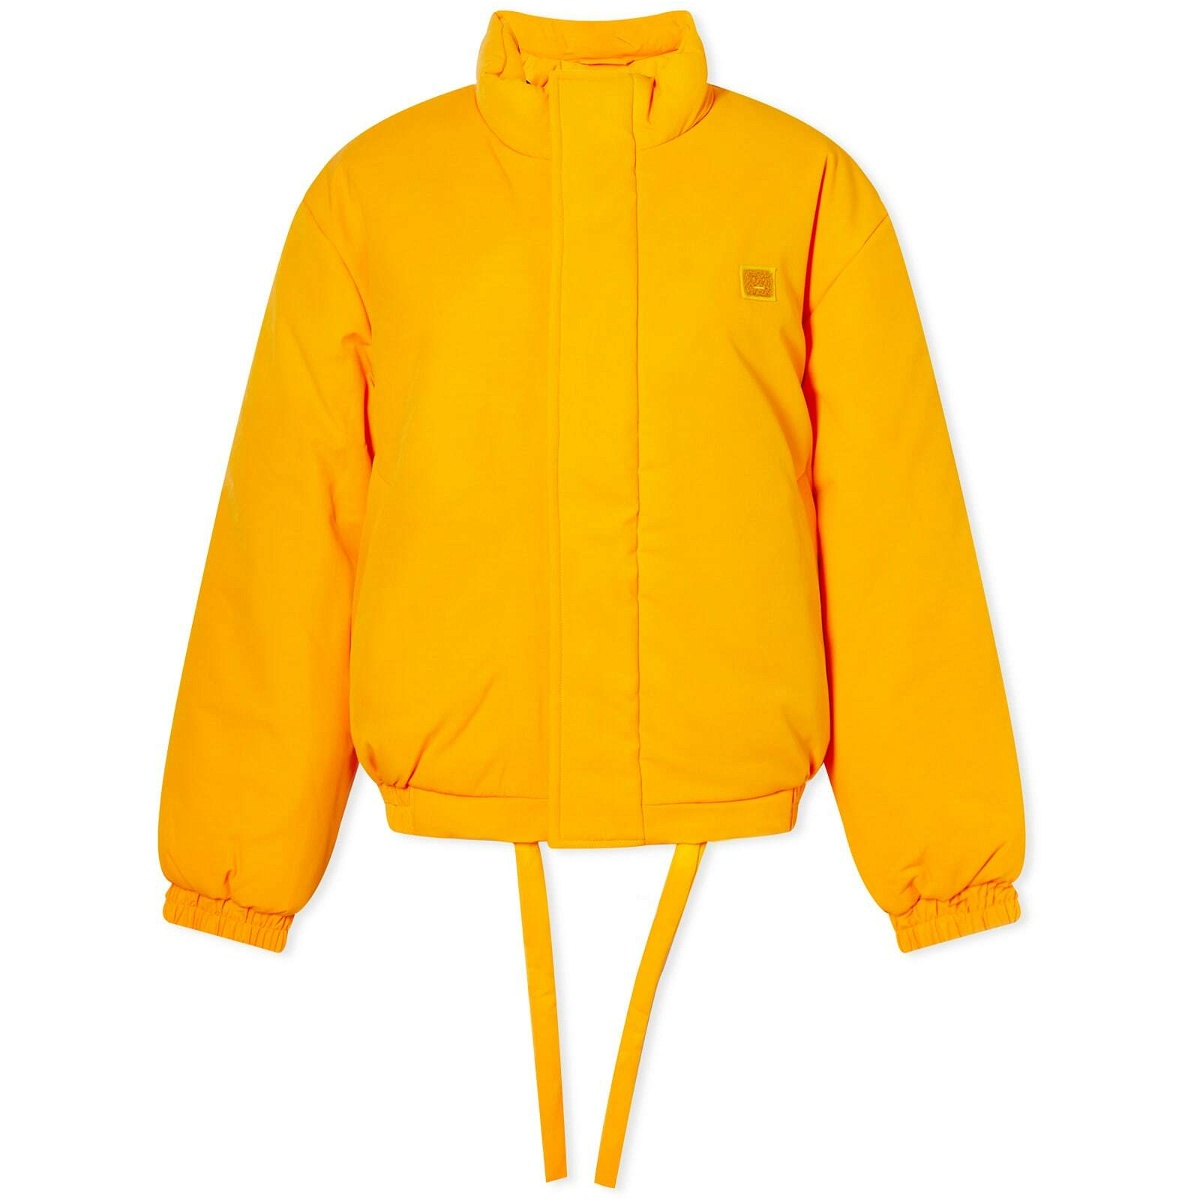 Acne Studios Women's Orthuro Heat Change Padded Jacket in Orange/Yellow ...